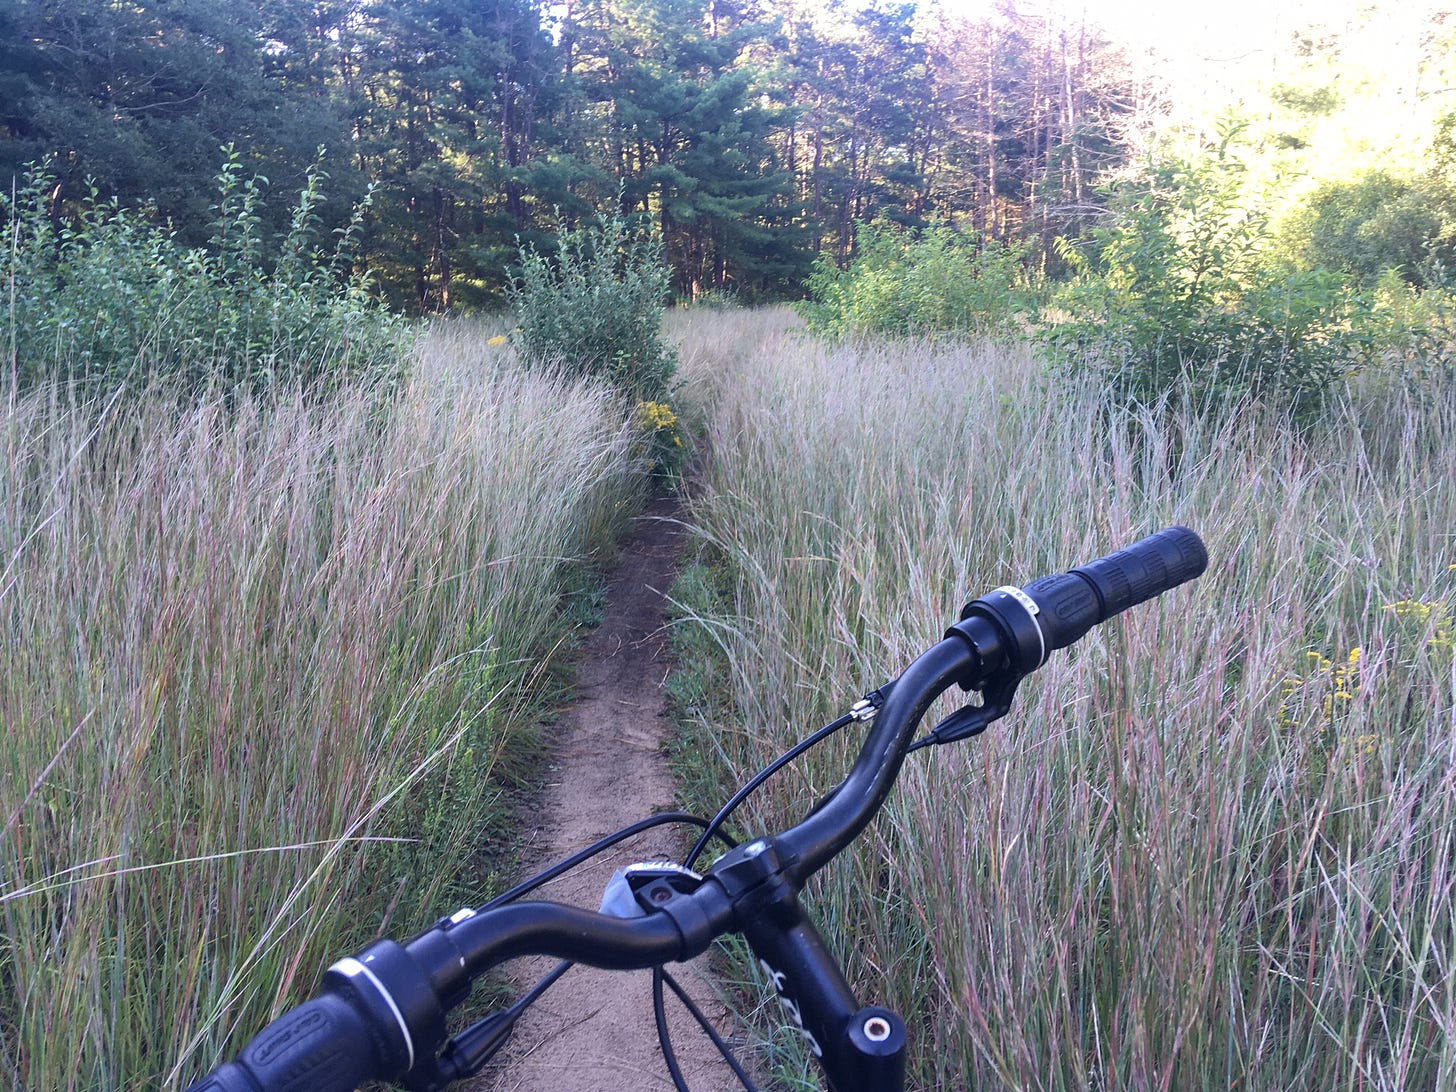 The handlebars of my bike on a trail running through tall grass